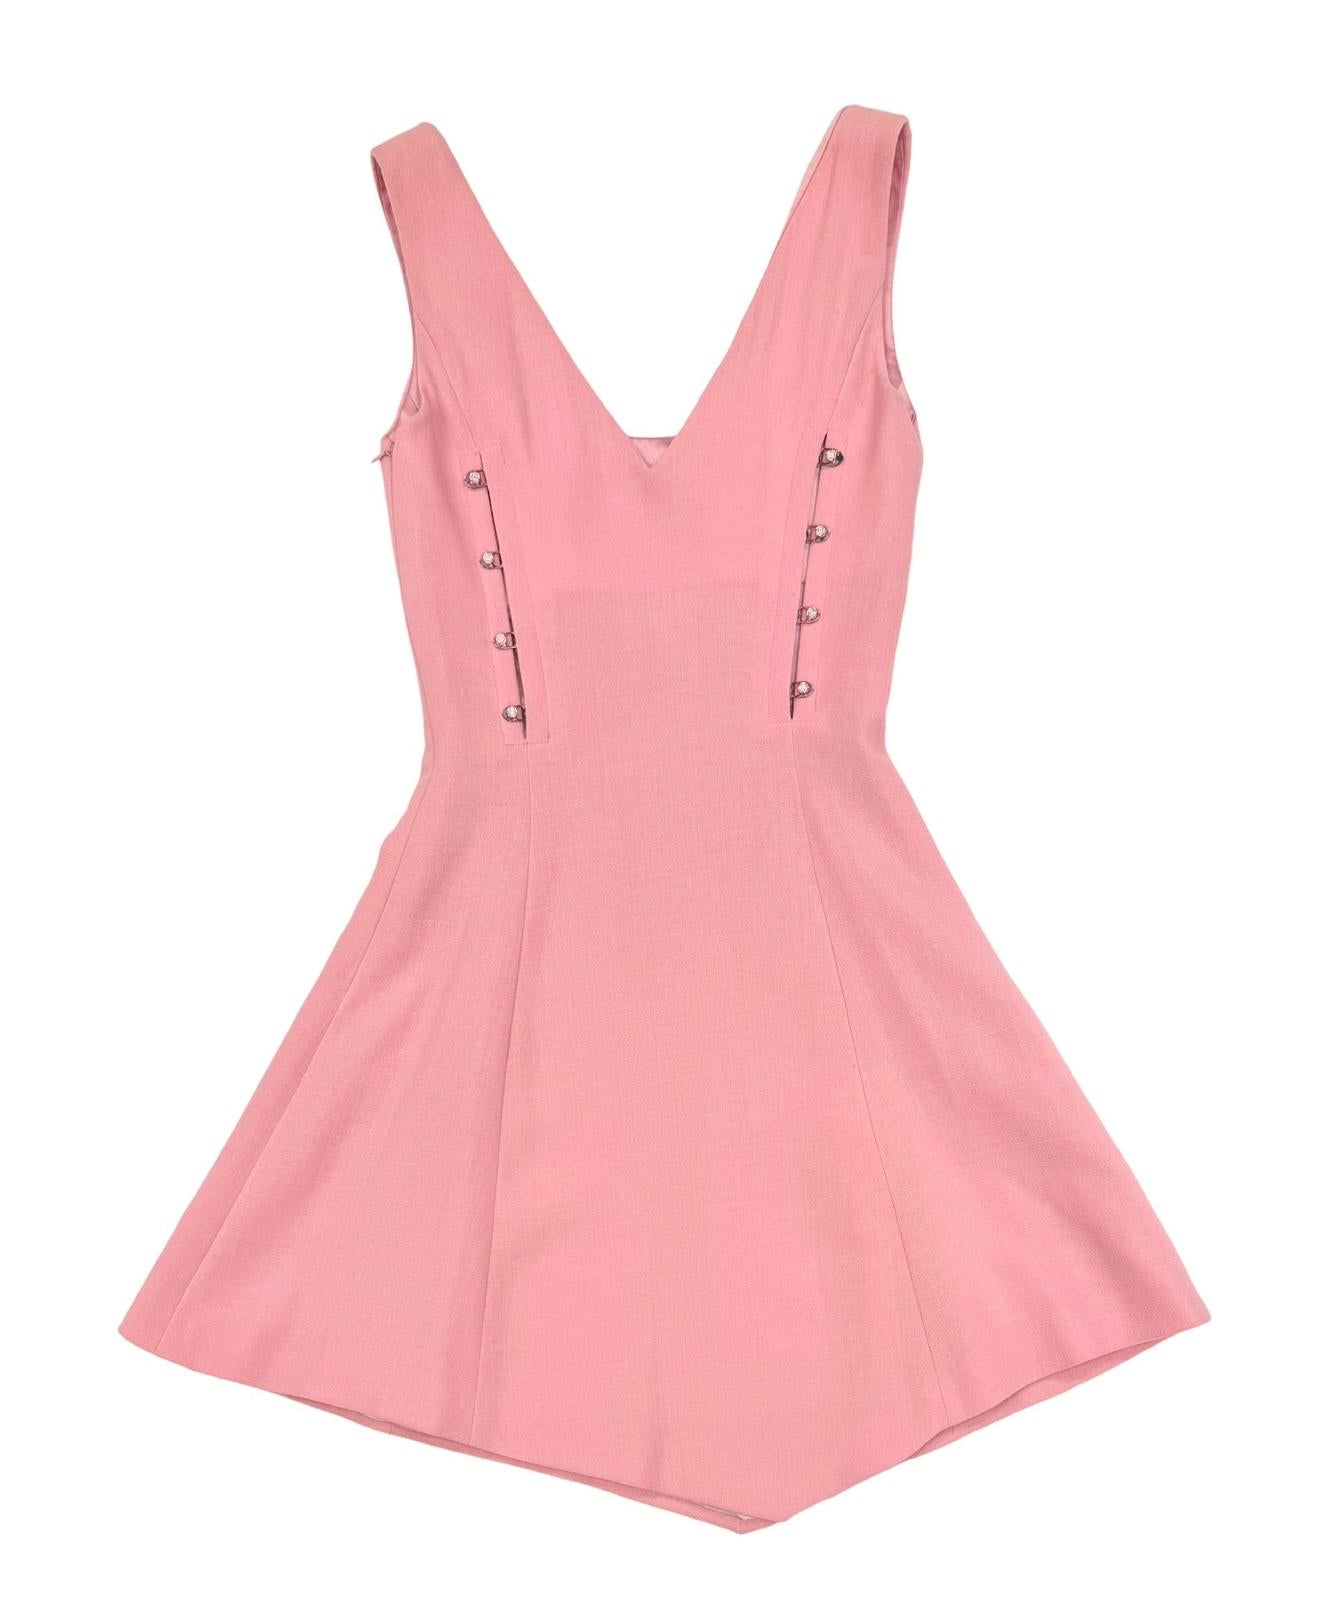 Versace Pink Corset Dress